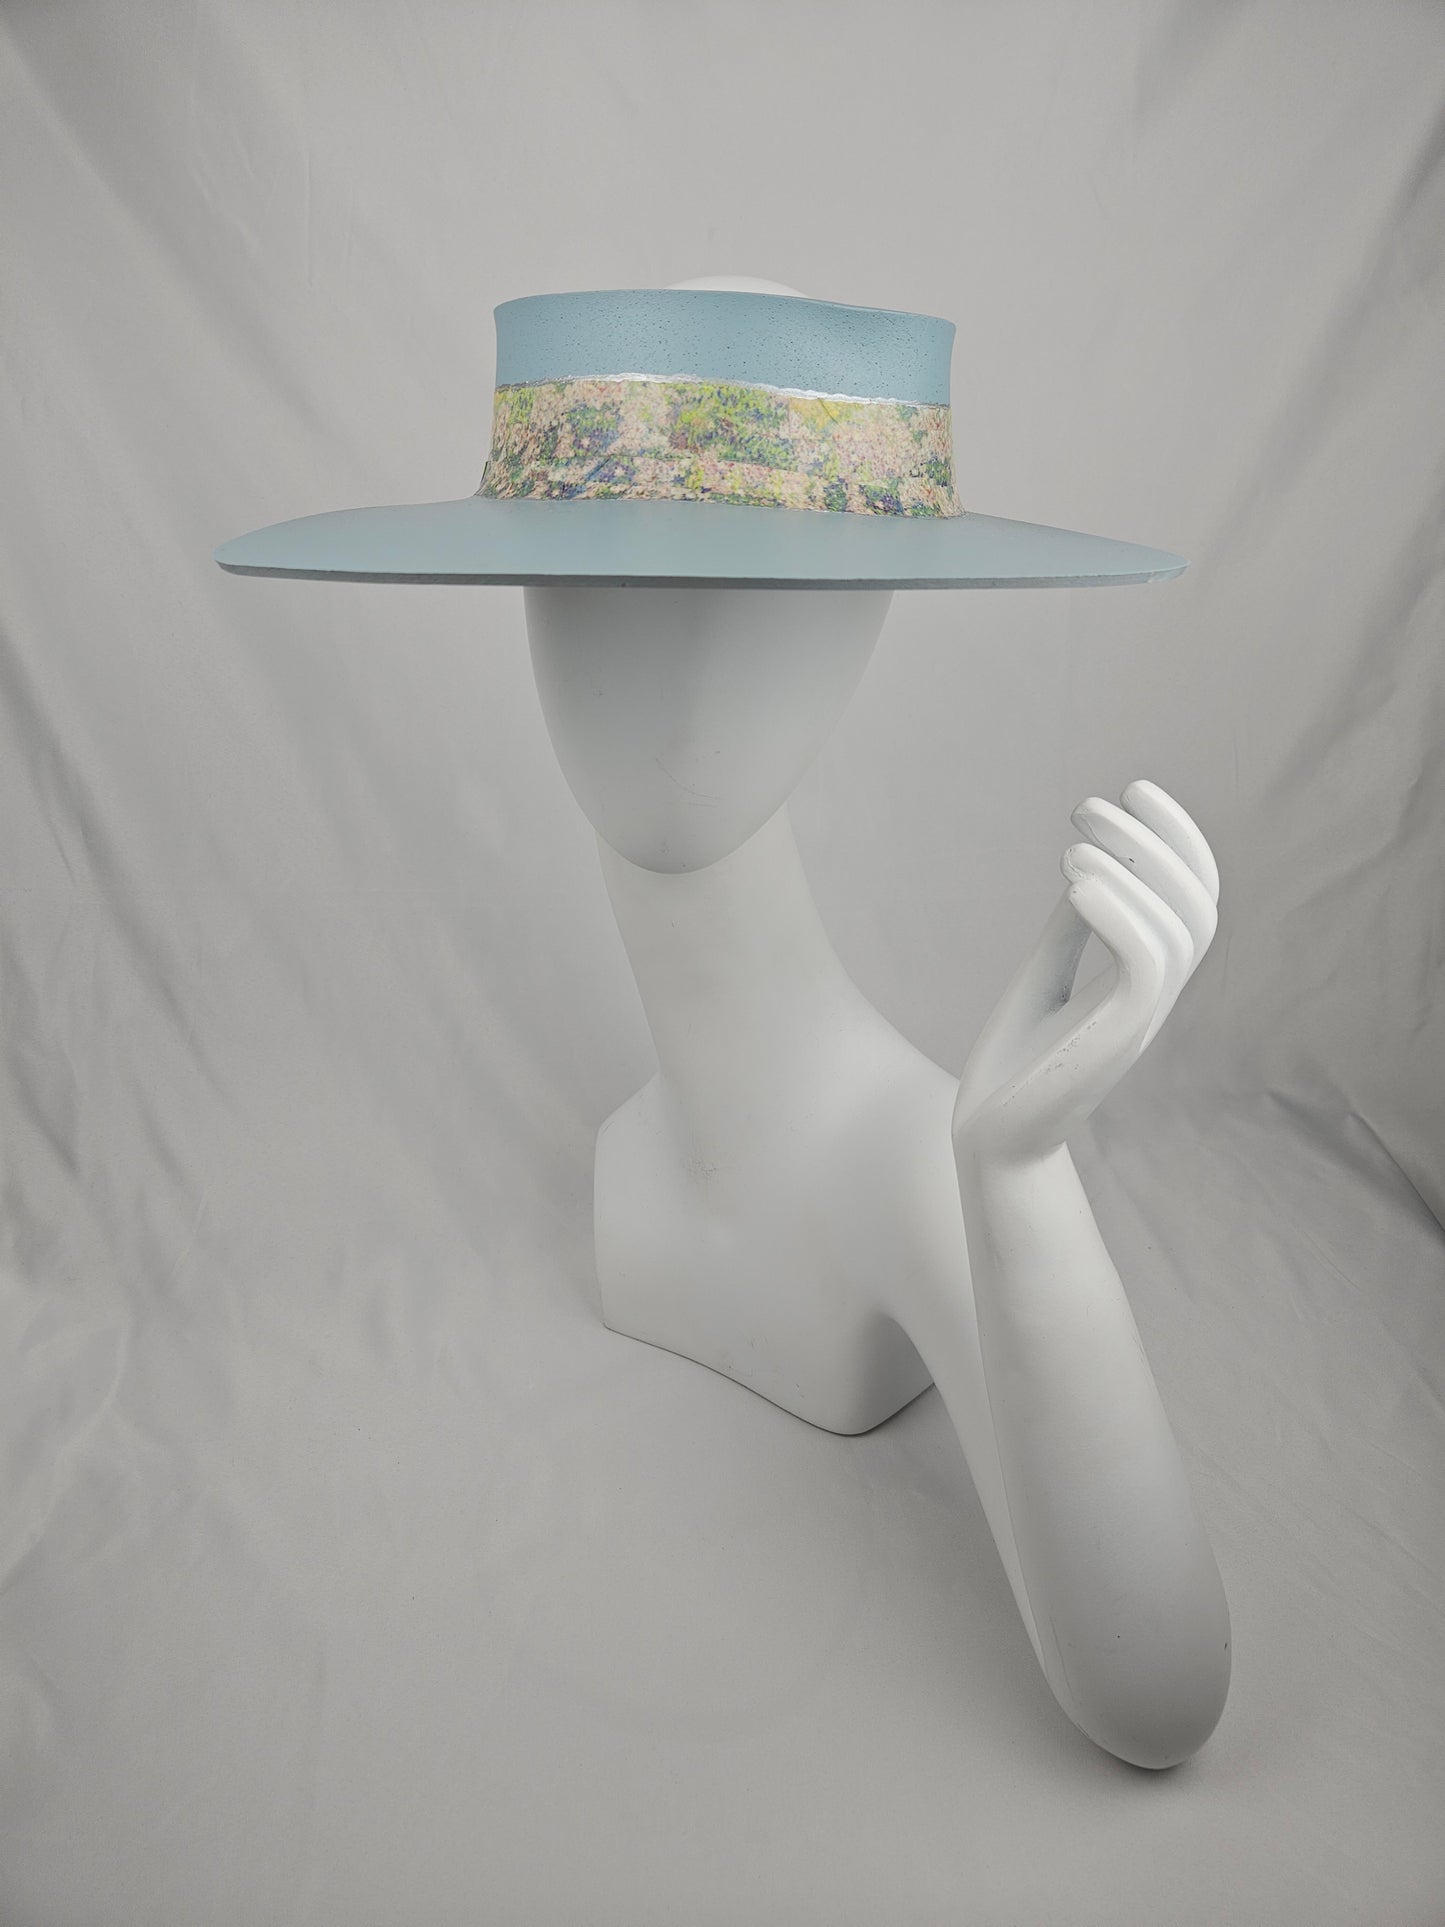 Soft Blue Audrey Sun Visor Hat with Monet Style Floral Band: 1950s, Walks, Brunch, Asian, Golf, Easter, Church, No Headache, Derby